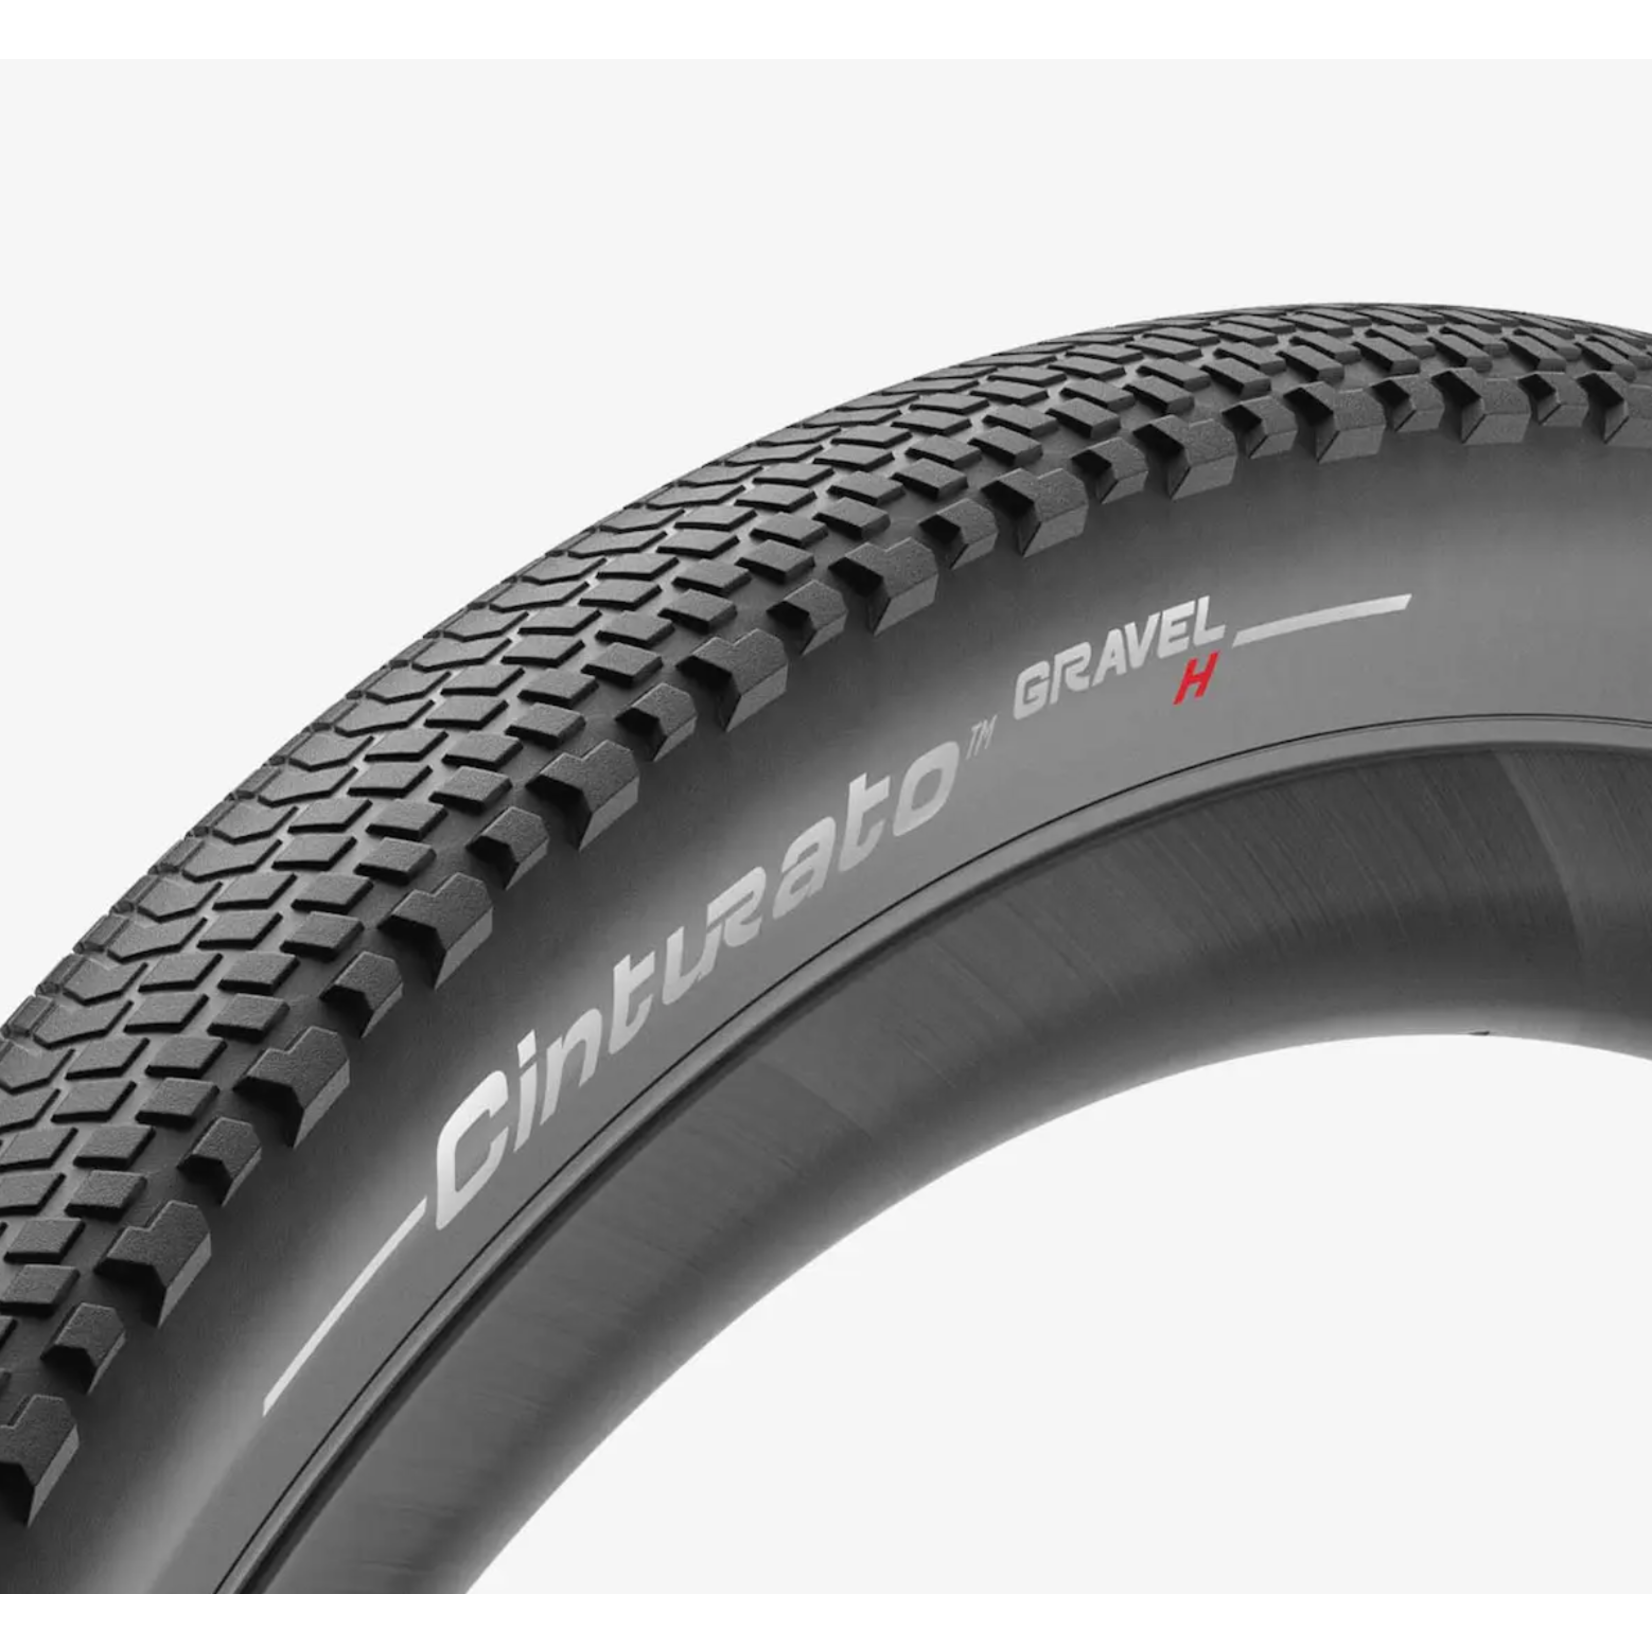 Pirelli Cinturato Gravel Hard TLR Folding Tyre